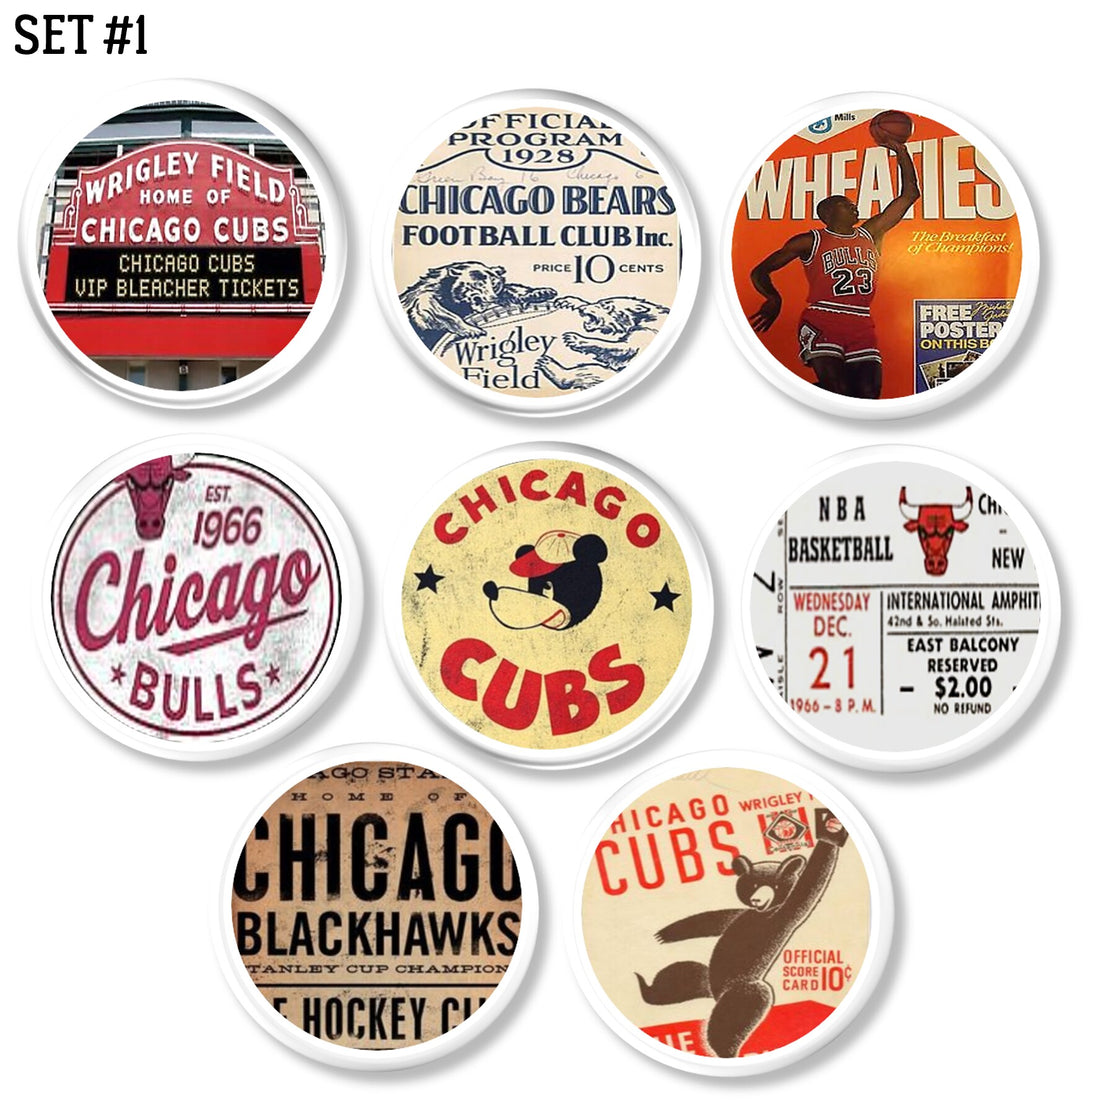 Chicago sports team themed drawer pull set of 8 knobs. Vintage Cubs, Bulls, Bears, Blackhawks ticket and program ephemera.